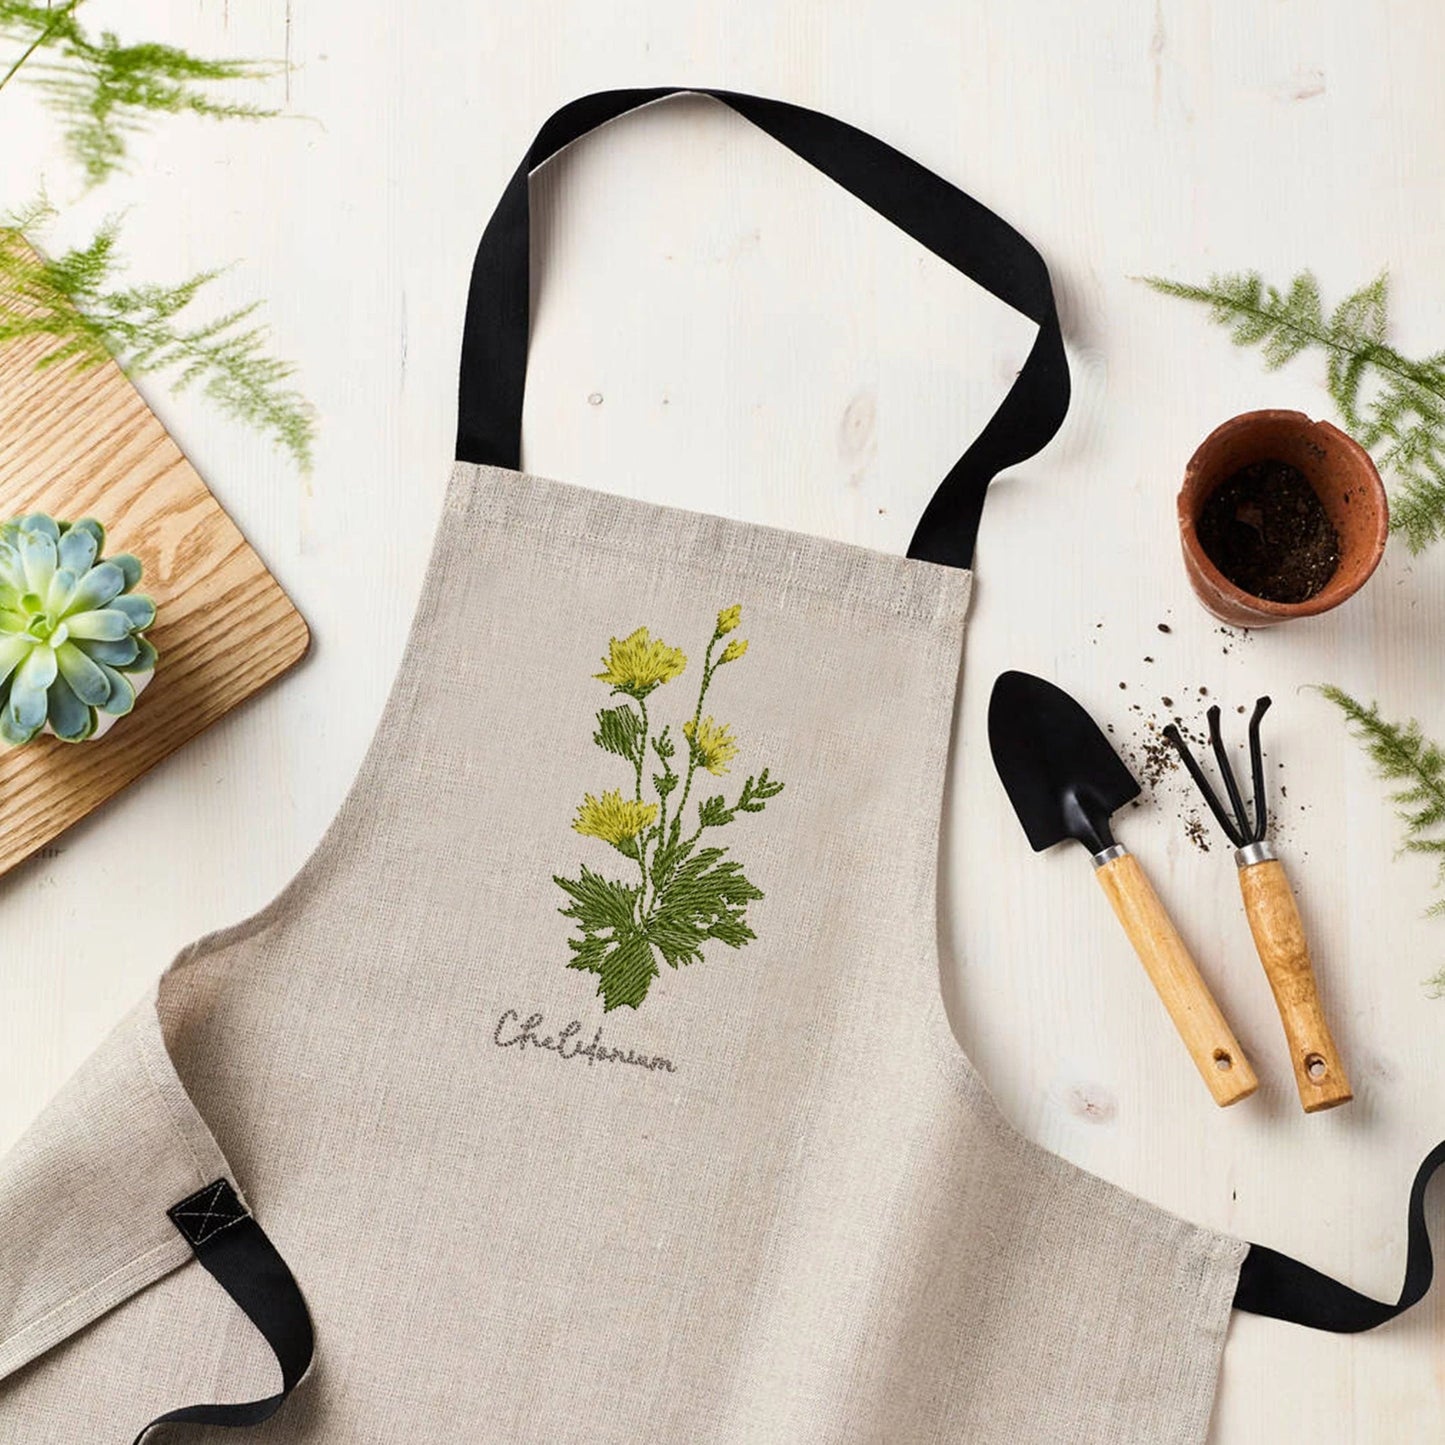 Chelidonium wildflower herb machine embroidery design on apron